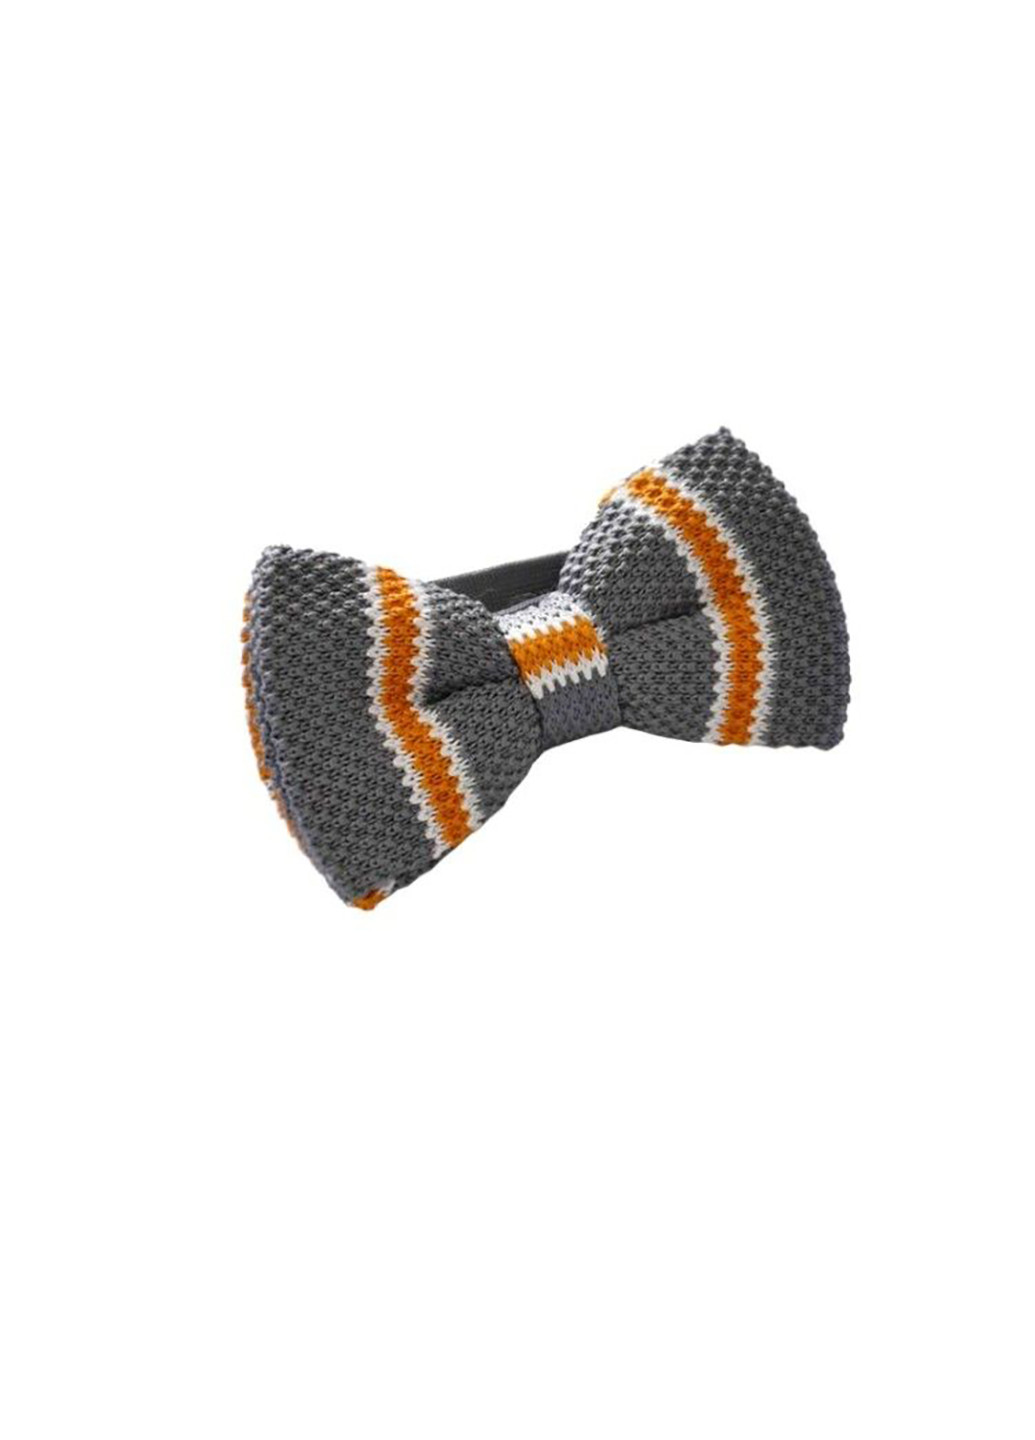 Мужской галстук бабочка 11 см Handmade (252129856)